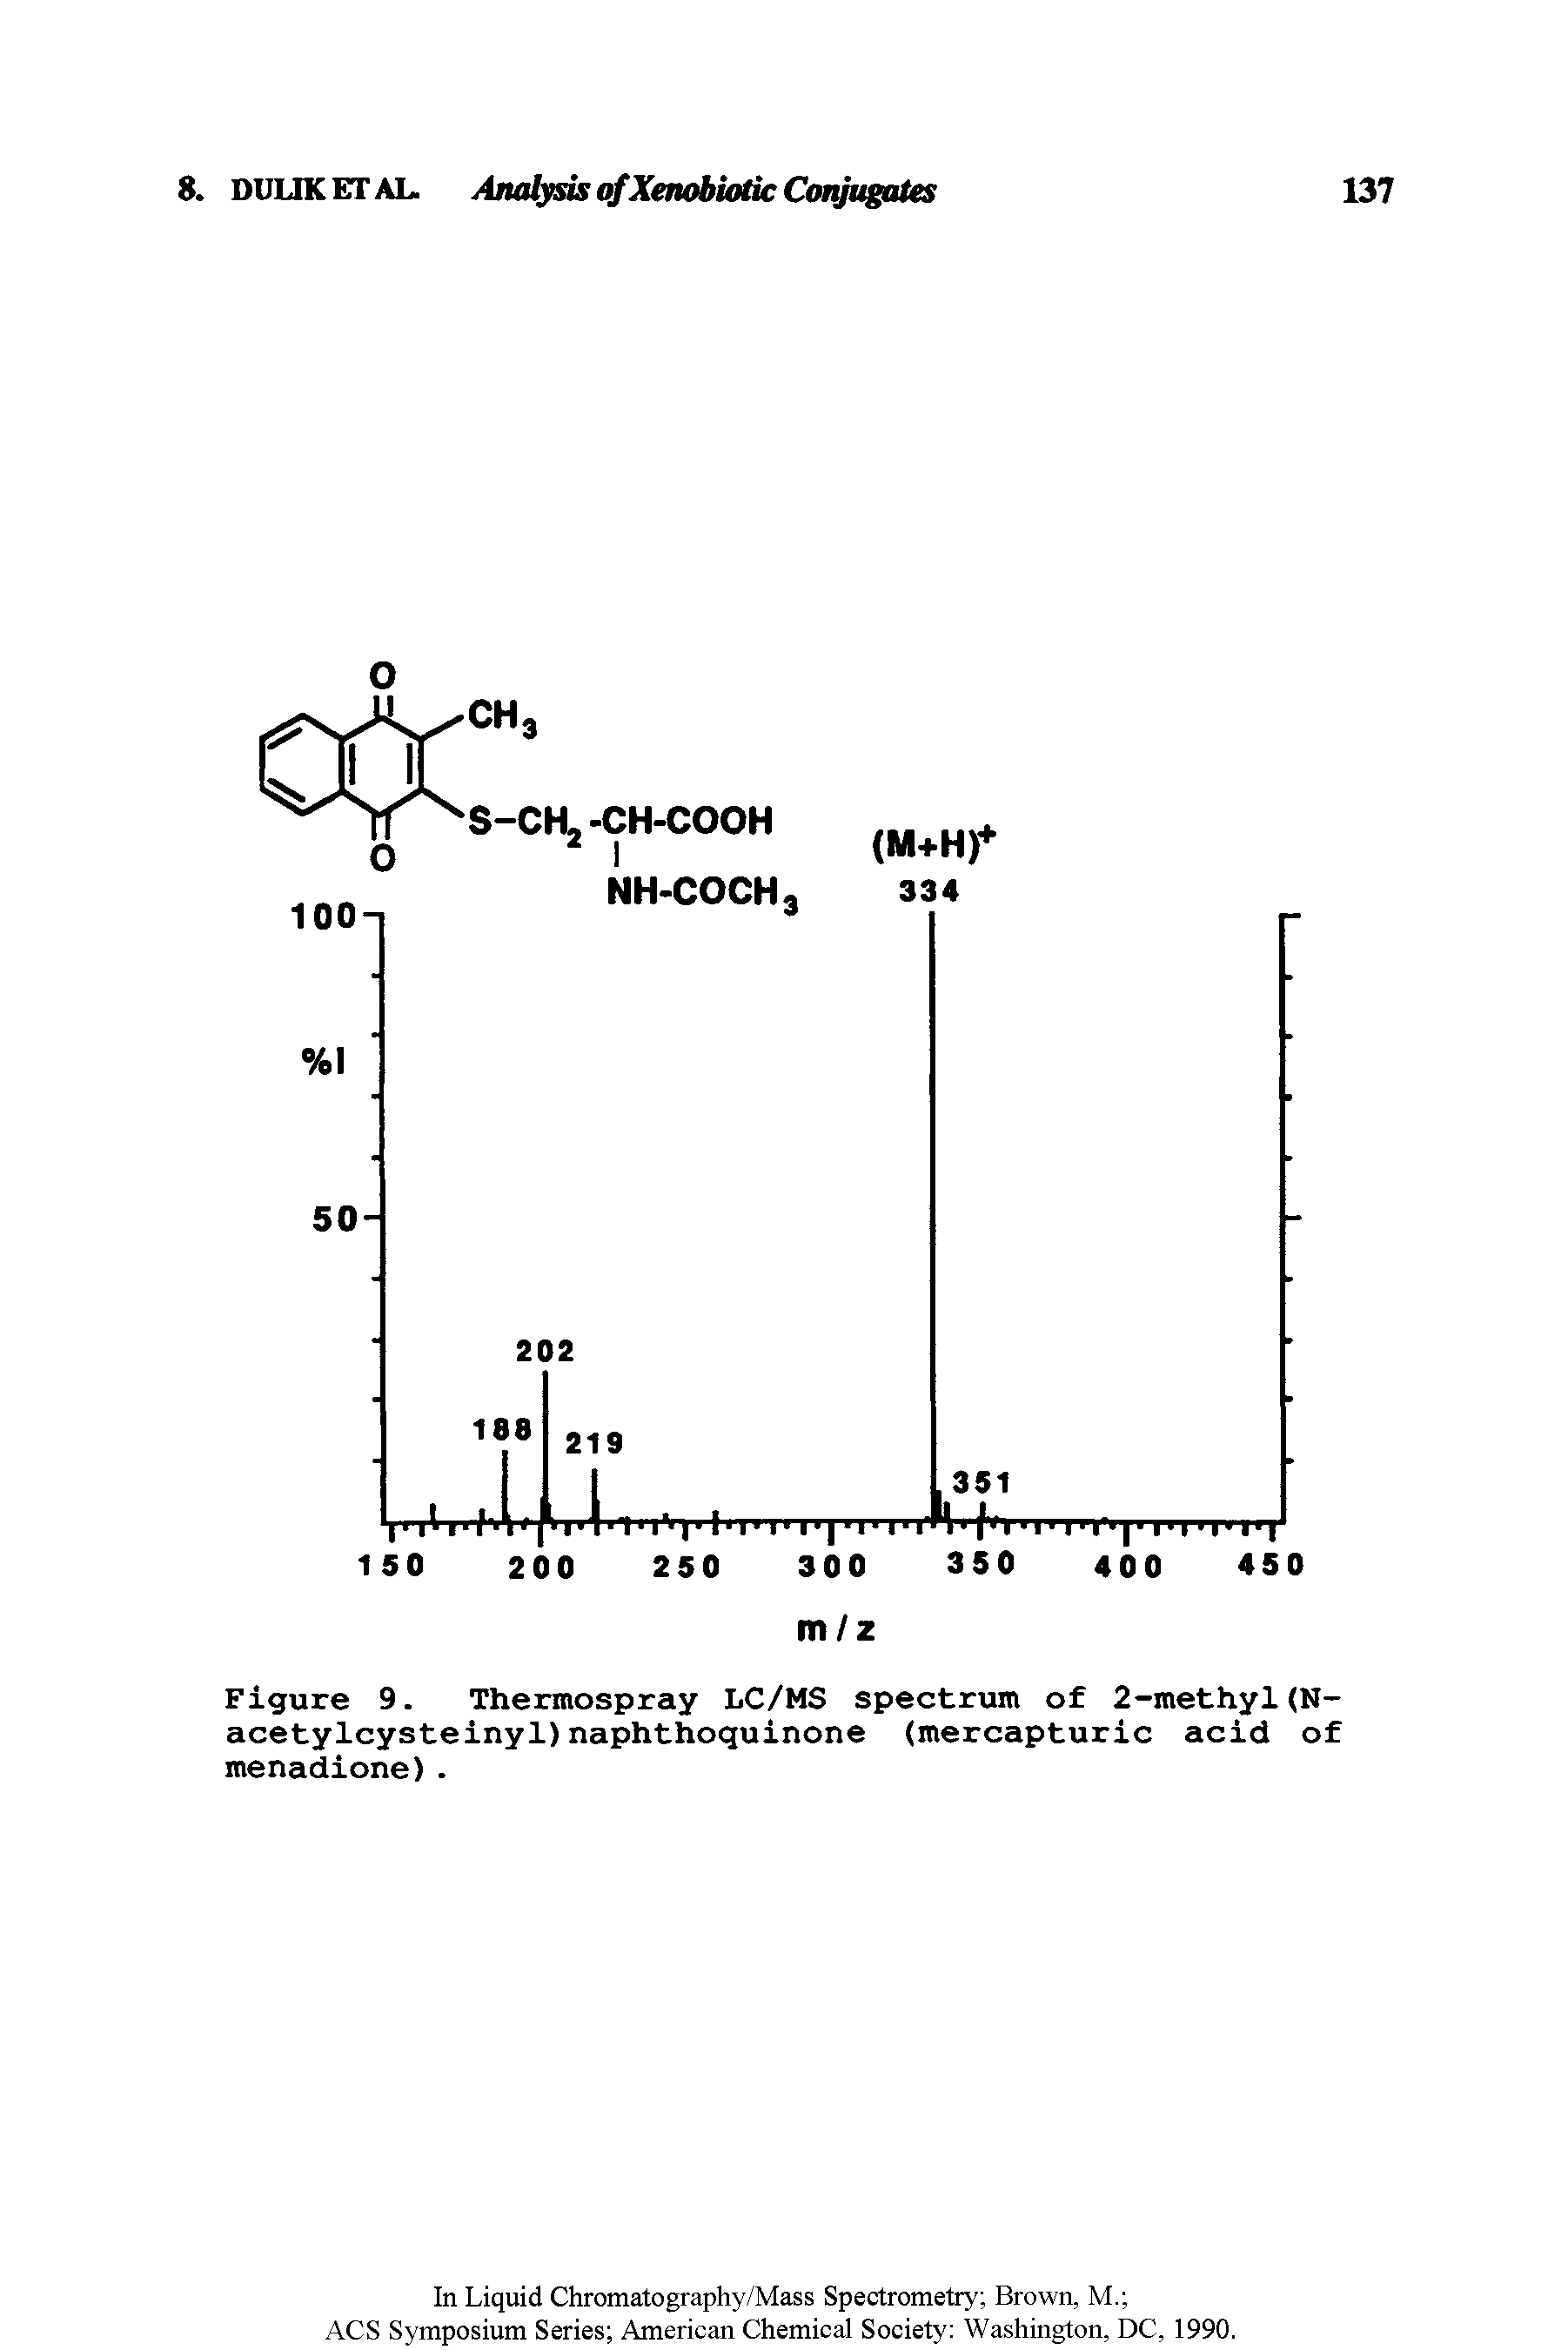 Figure 9. Thermospray LC/MS spectrum of 2-methyl(N-acetylcysteinyl)naphthoquinone (mercapturic acid of menadione).